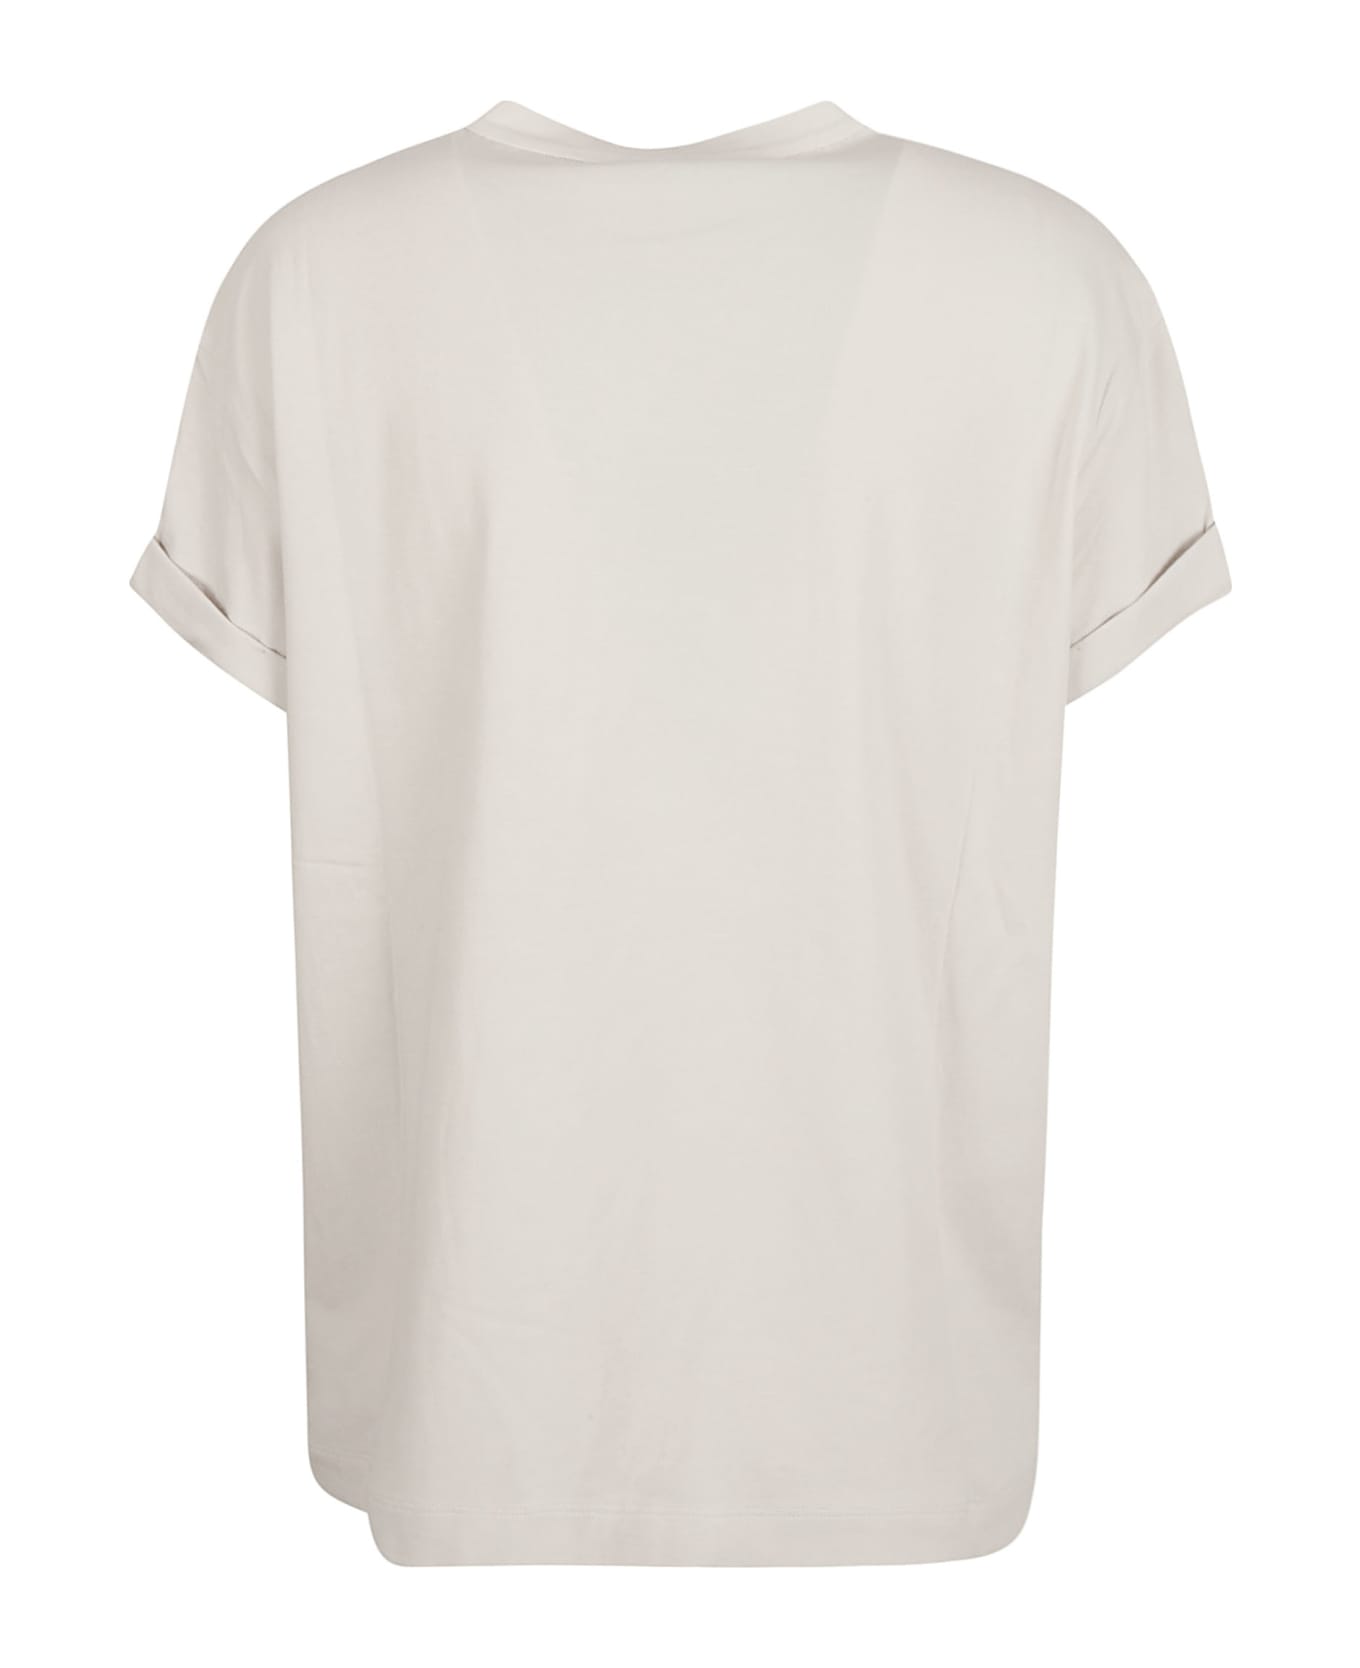 Brunello Cucinelli Patched Pocket Plain T-shirt - White Sand Tシャツ